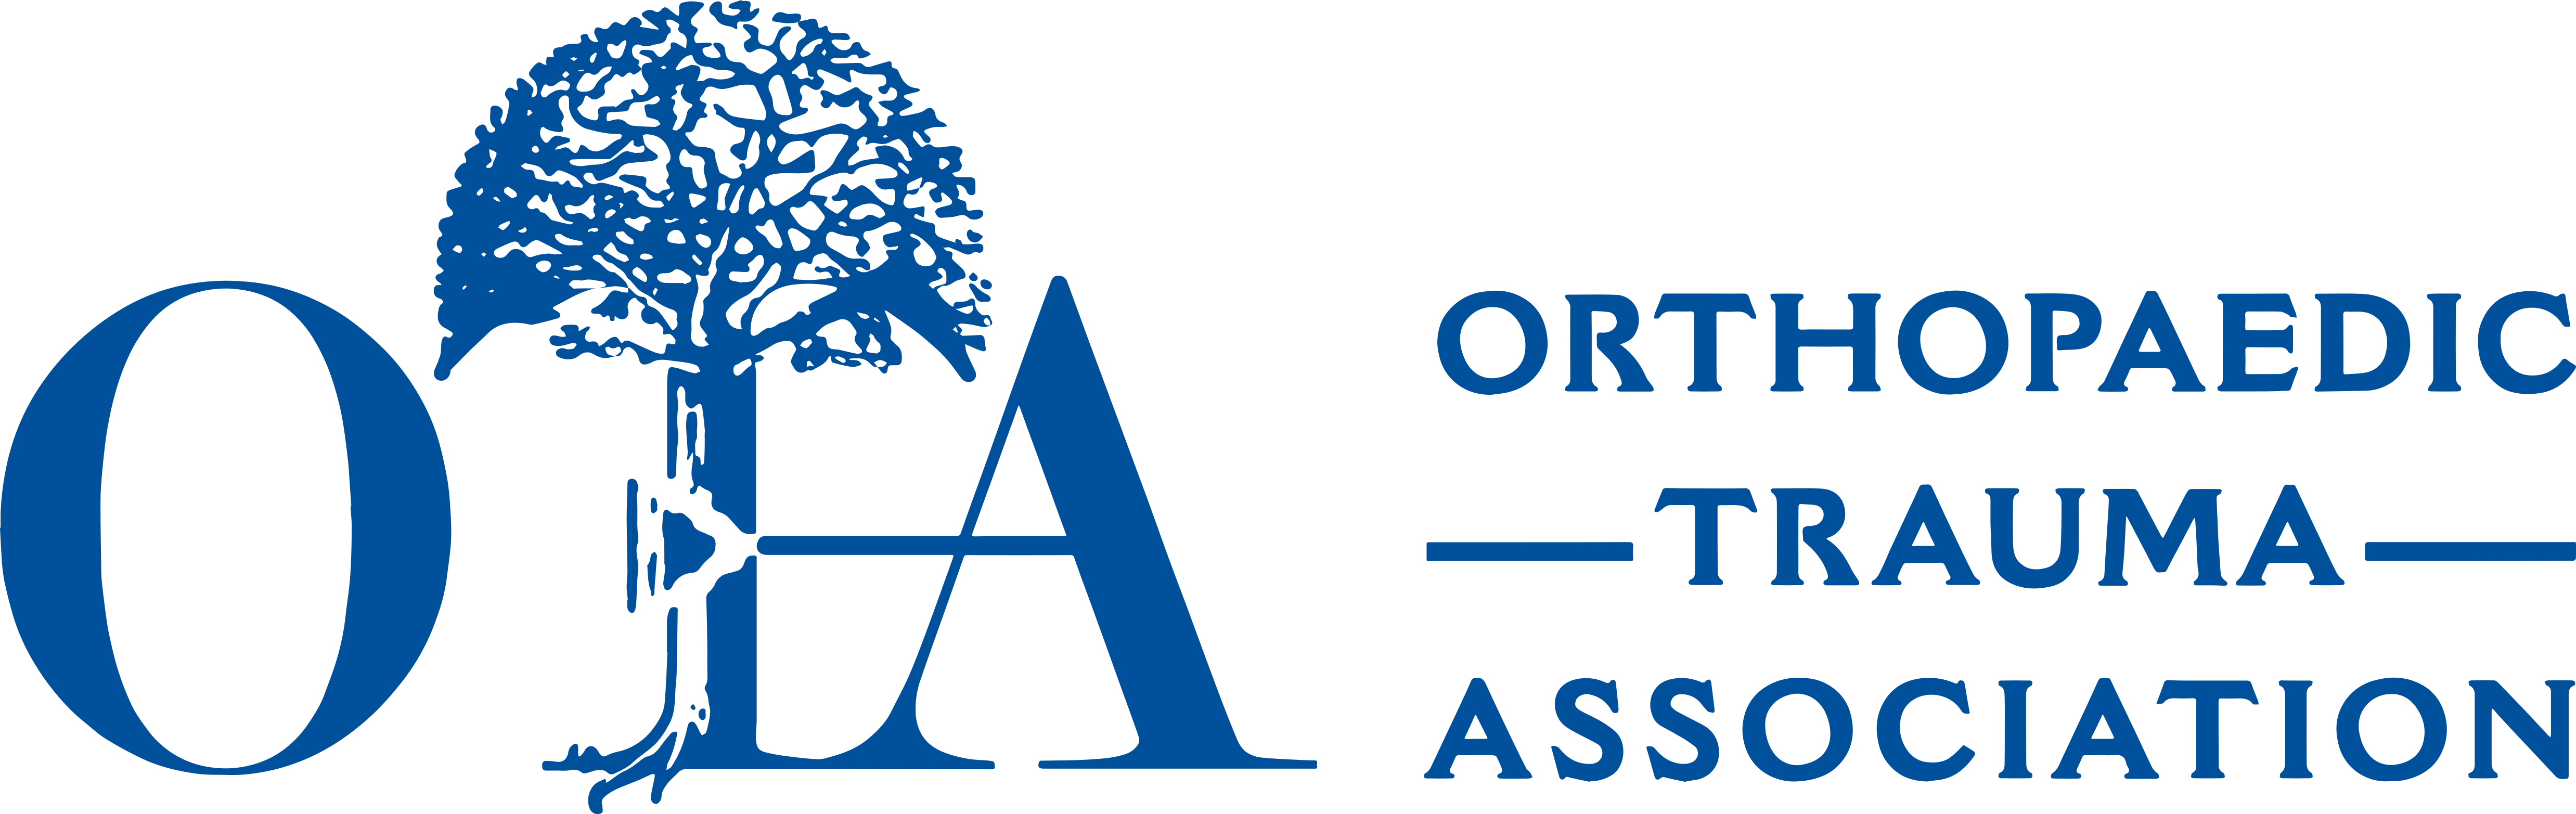 Orthopaedic Trauma Association (OTA) Annual Meeting